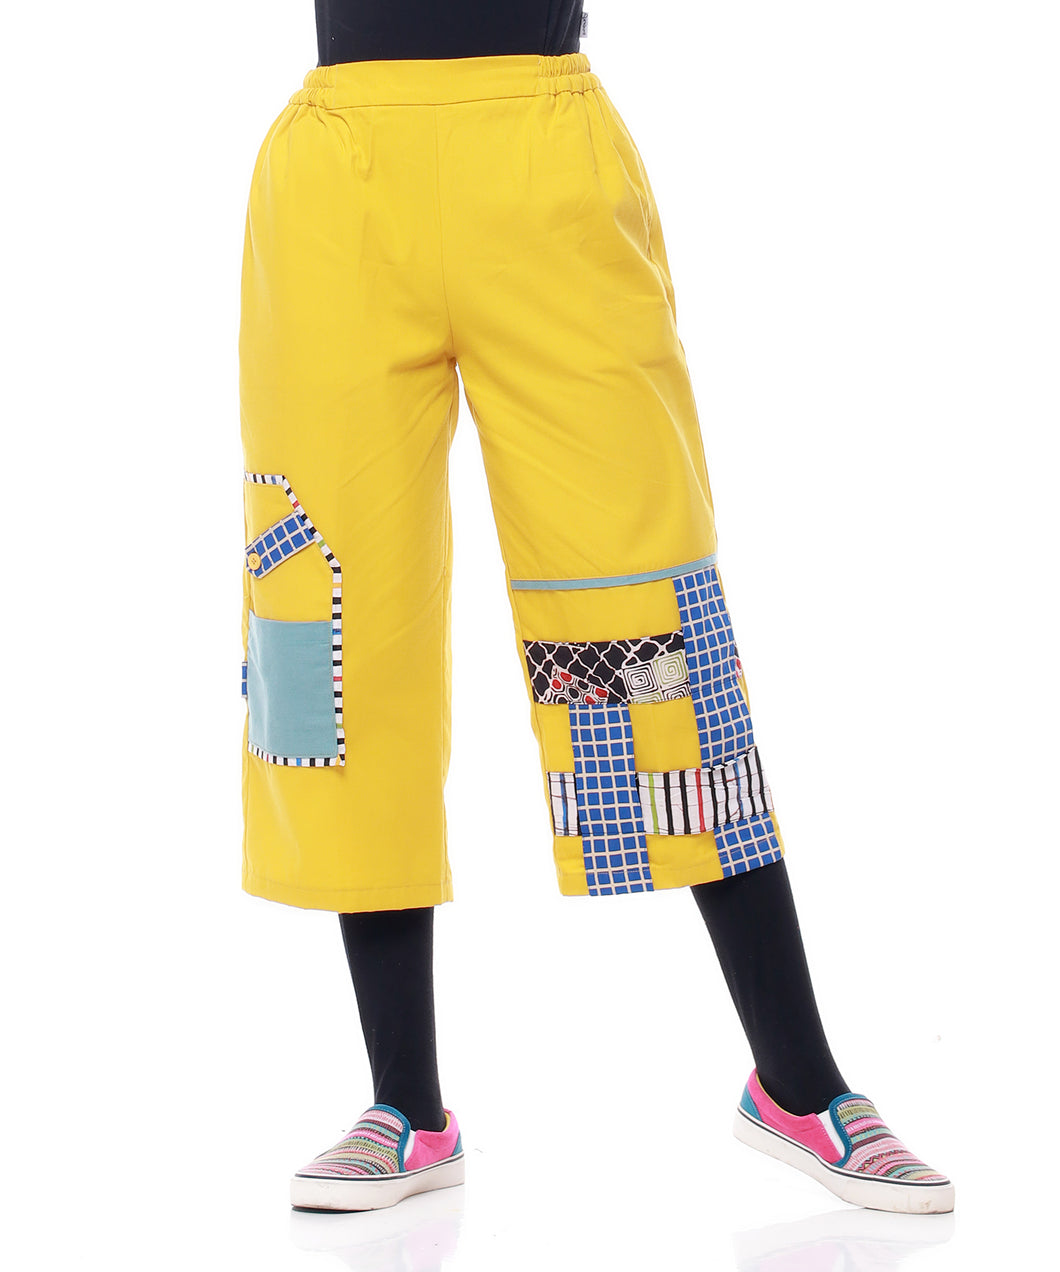 Block Yellow Pants